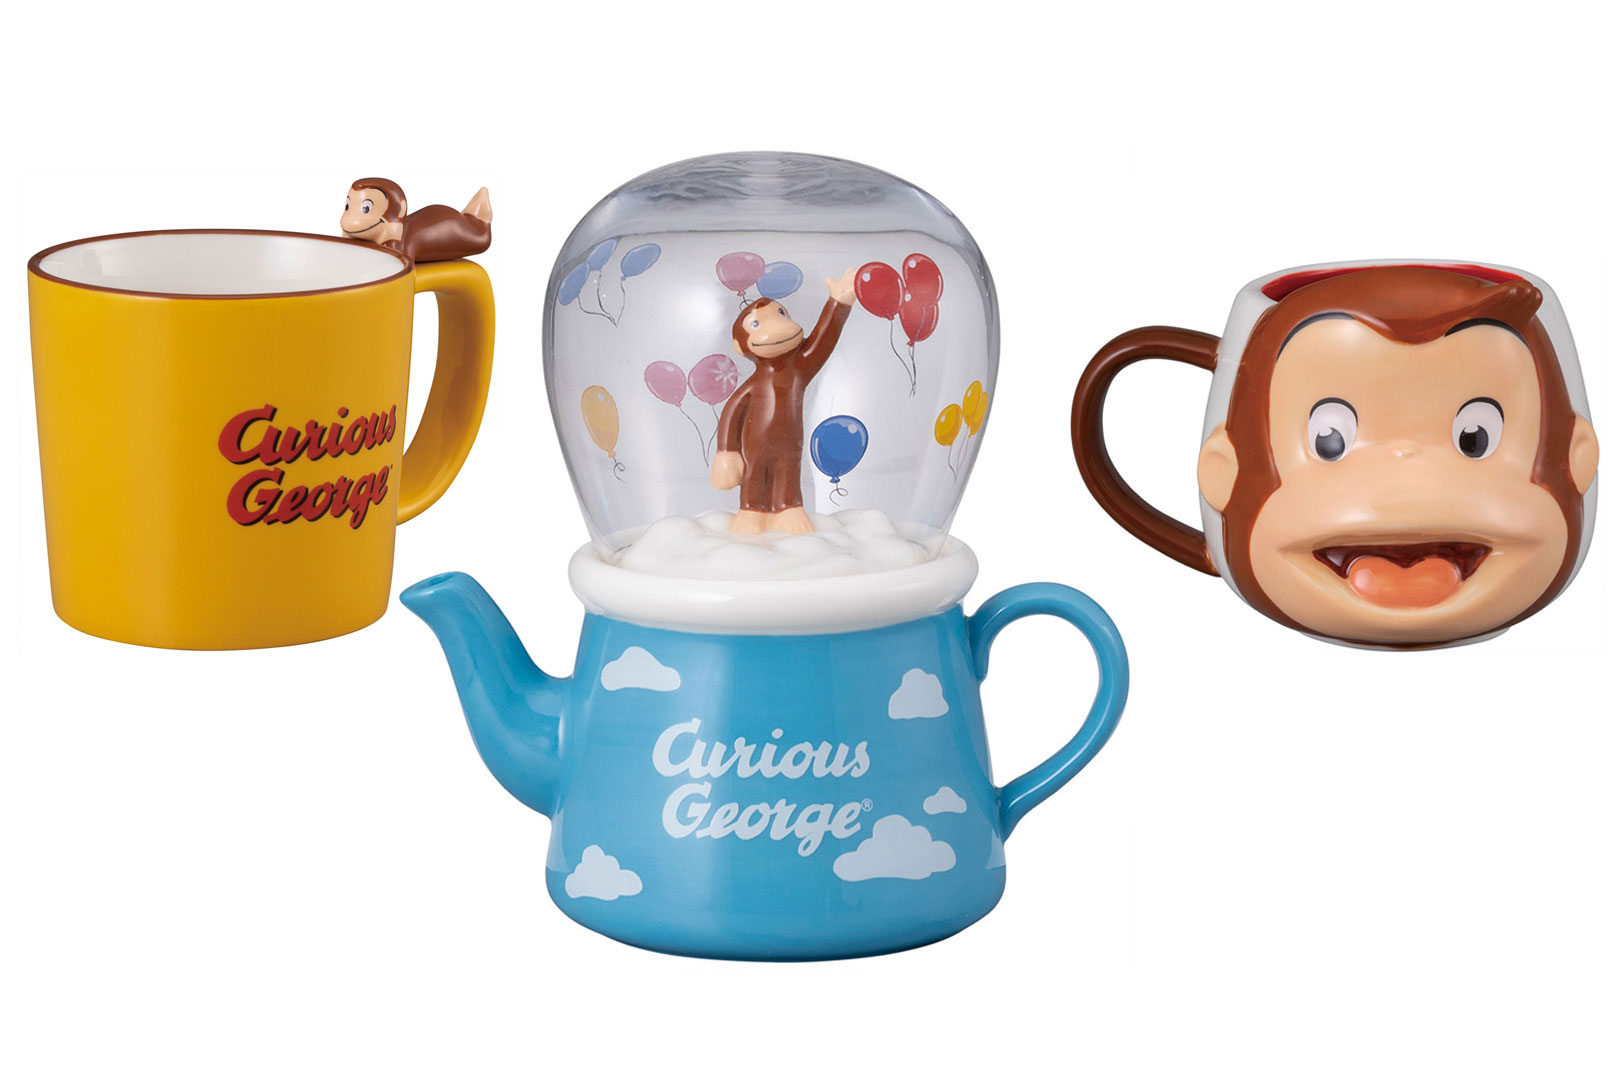 Curious George Tea Sets & Mugs, J Style